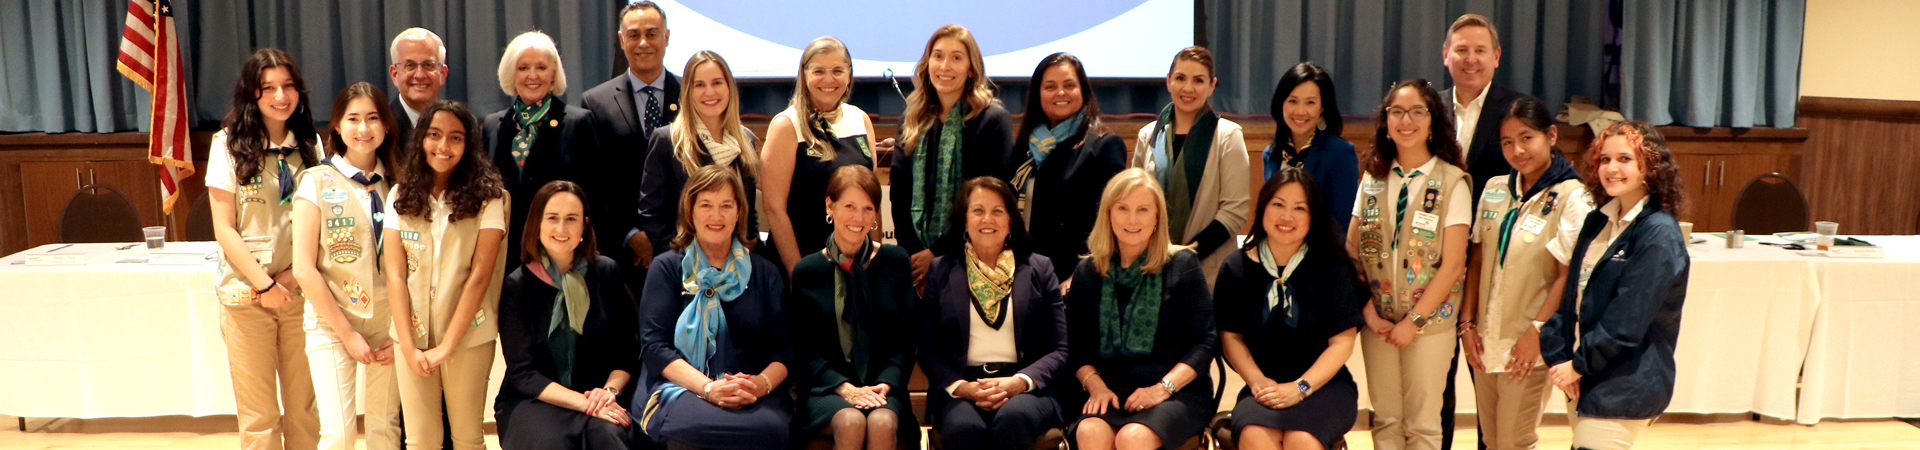  Girl Scouts of Orange County's Board of Directors 